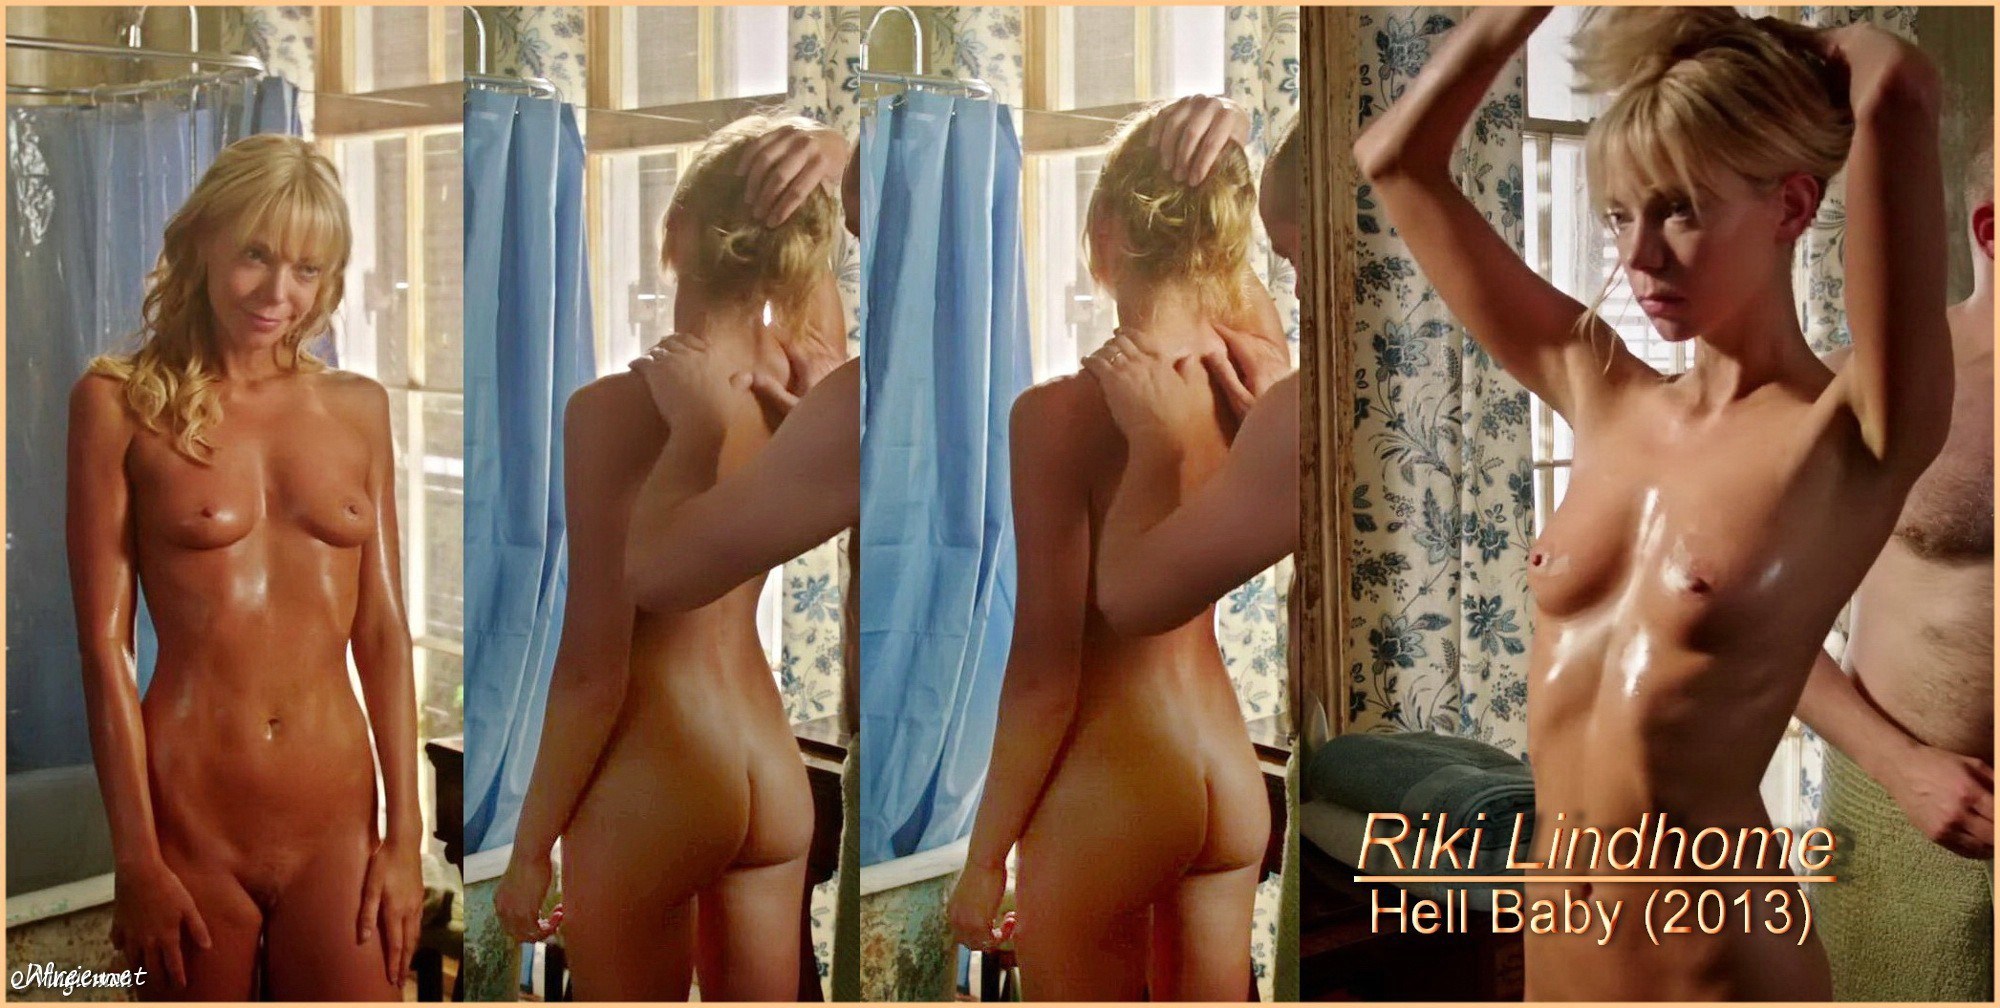 Michelle flaherty nude - Alyson Hannigan.